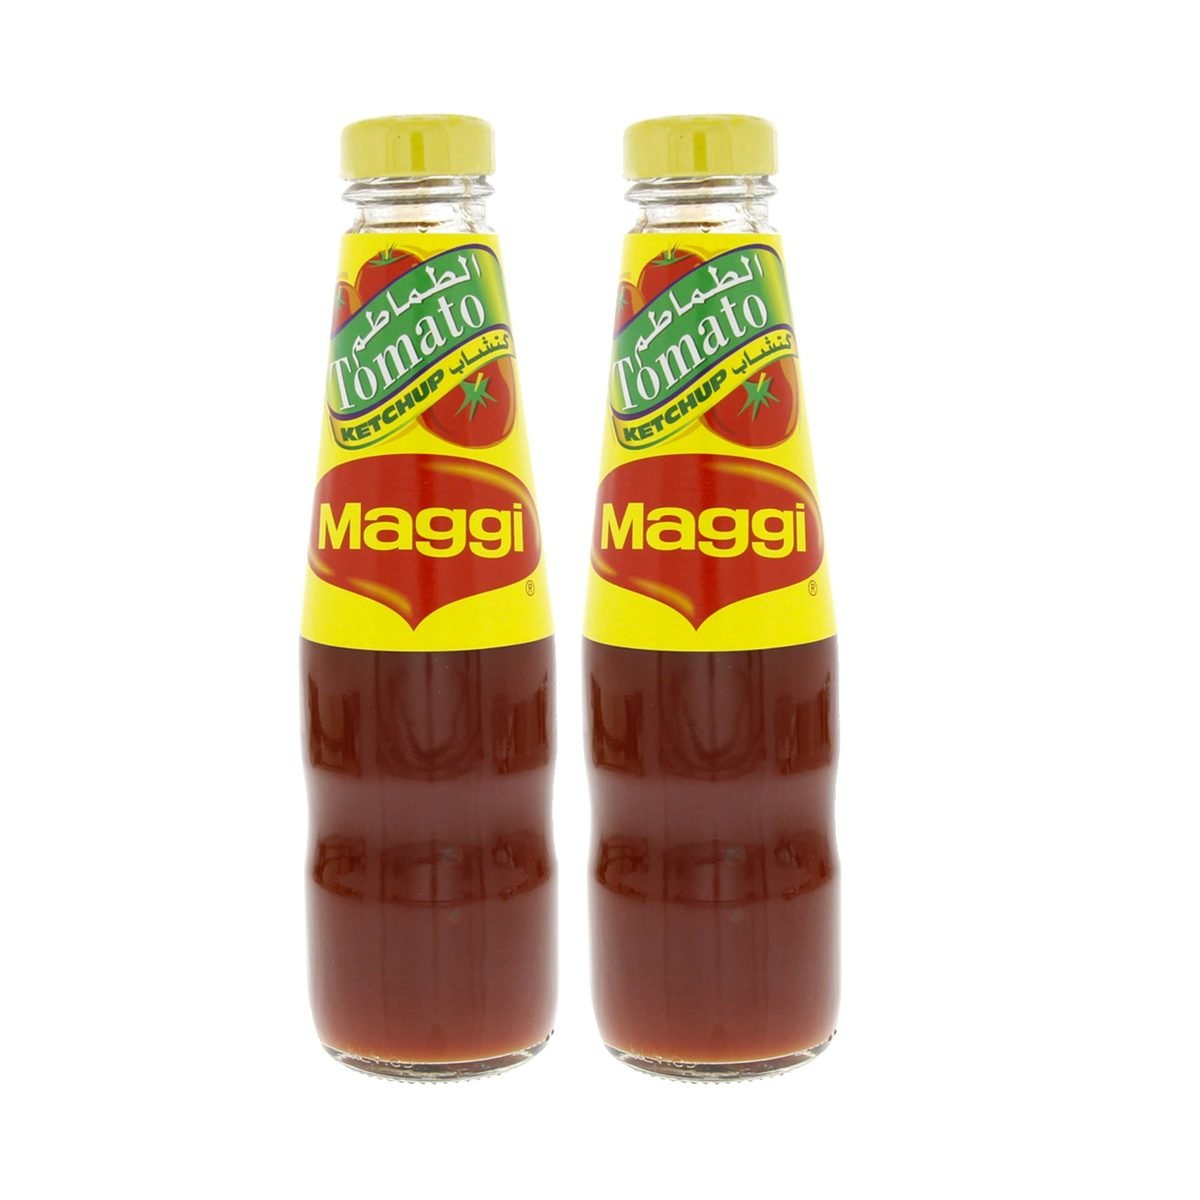 Maggi Tomato Ketchup 2 x 325g